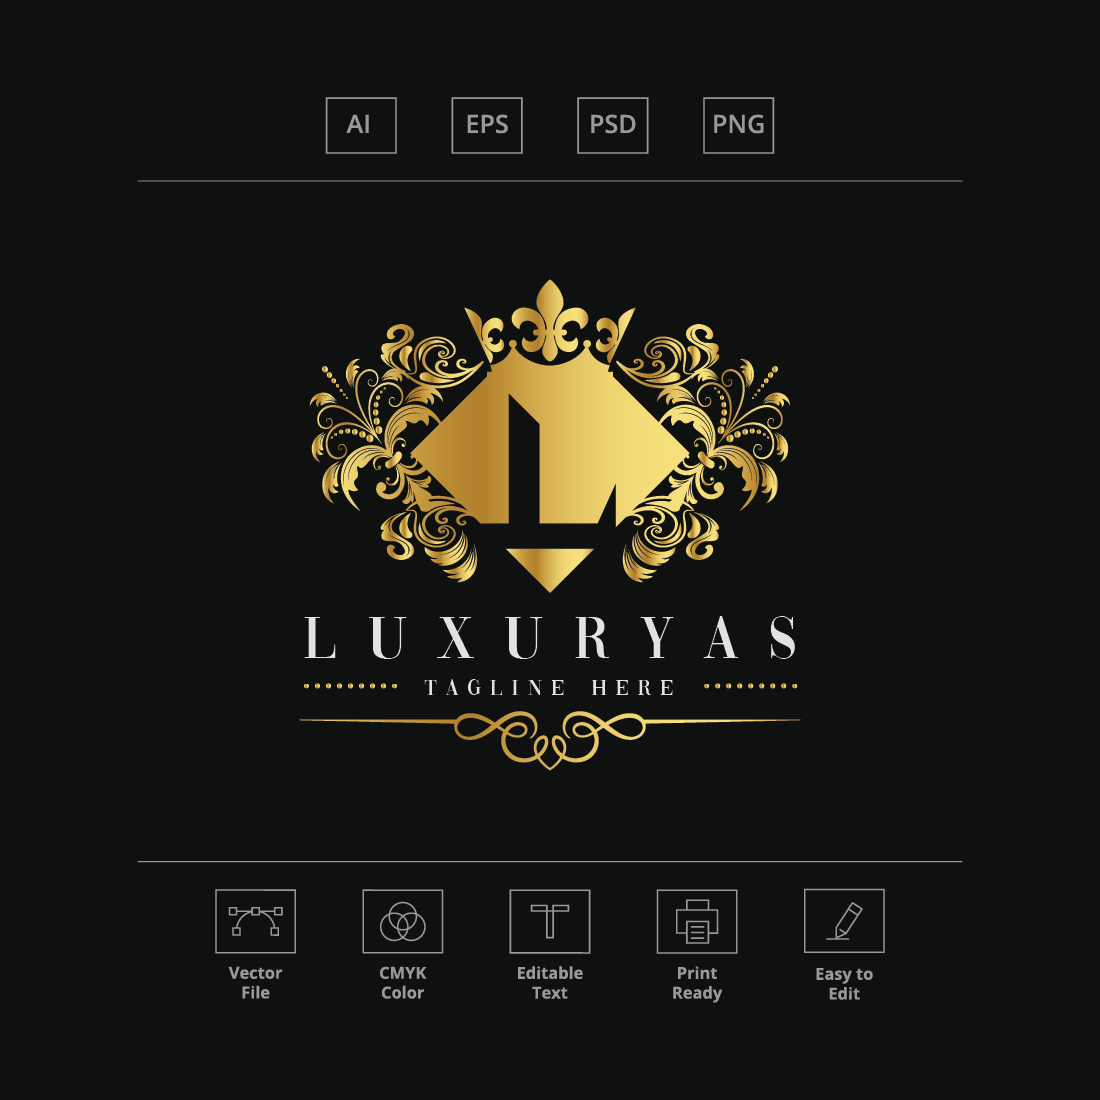 Luxuryas Letter L Logo cover image.